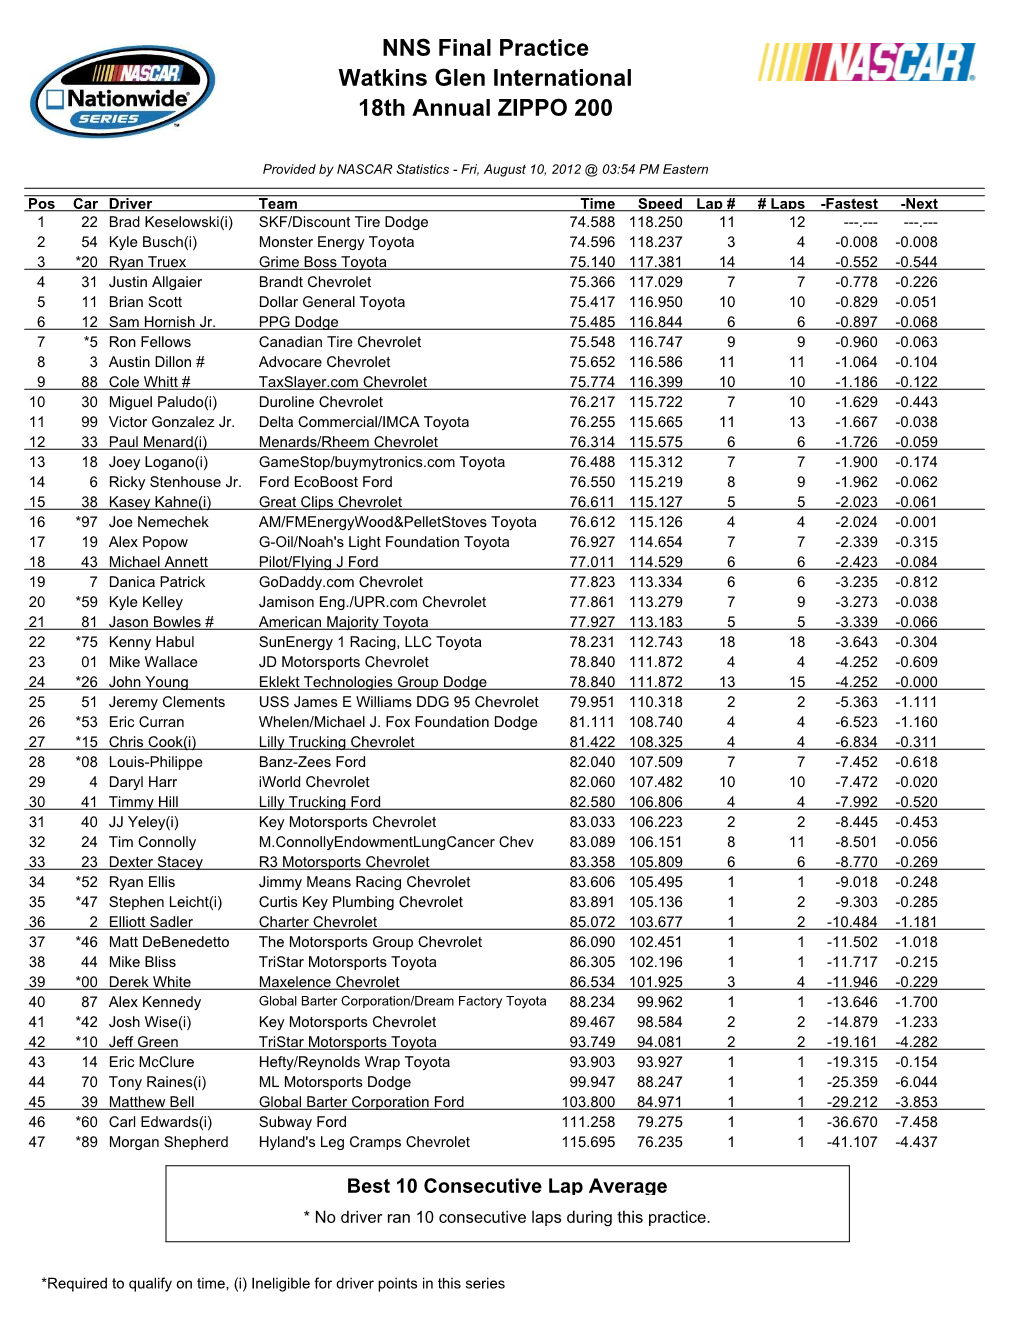 NNS Final Practice Watkins Glen International 18Th Annual ZIPPO 200